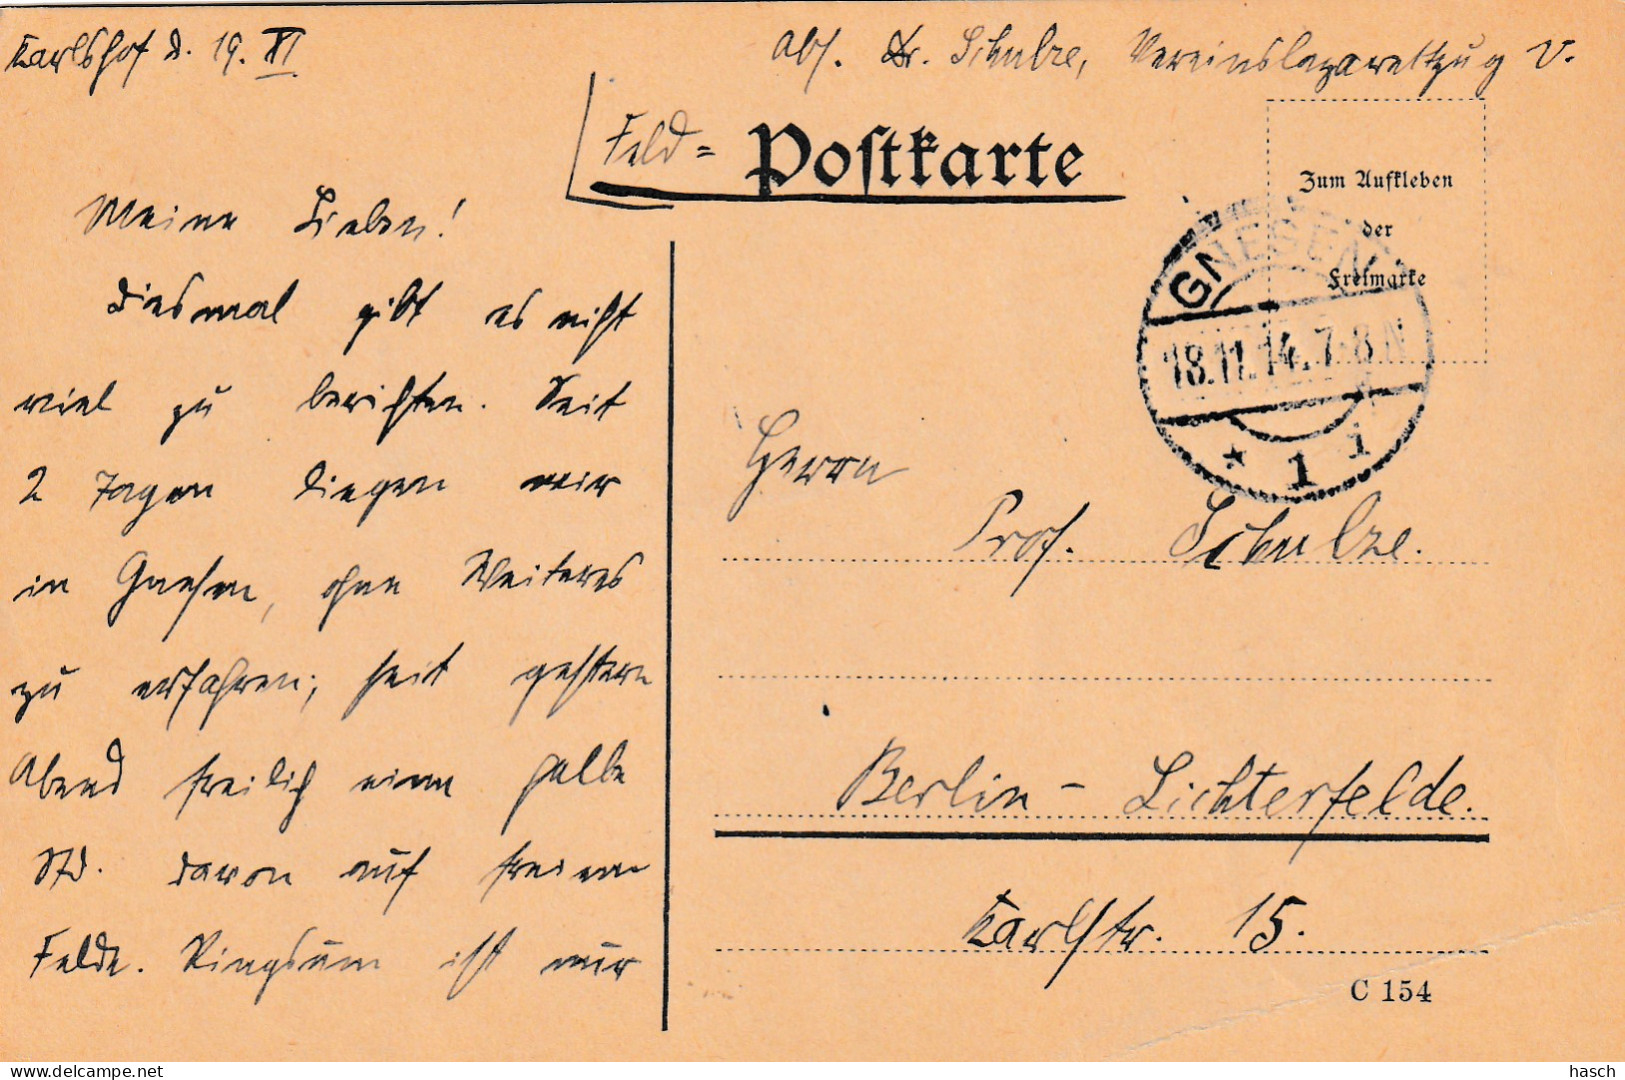 4935 7 Feldpostkarte 18-11-1914 Gnesen 1 (Polen) Nach Berlin Lichterfelde. Absender Dr Schulze, Krankenpfleger  - War 1914-18